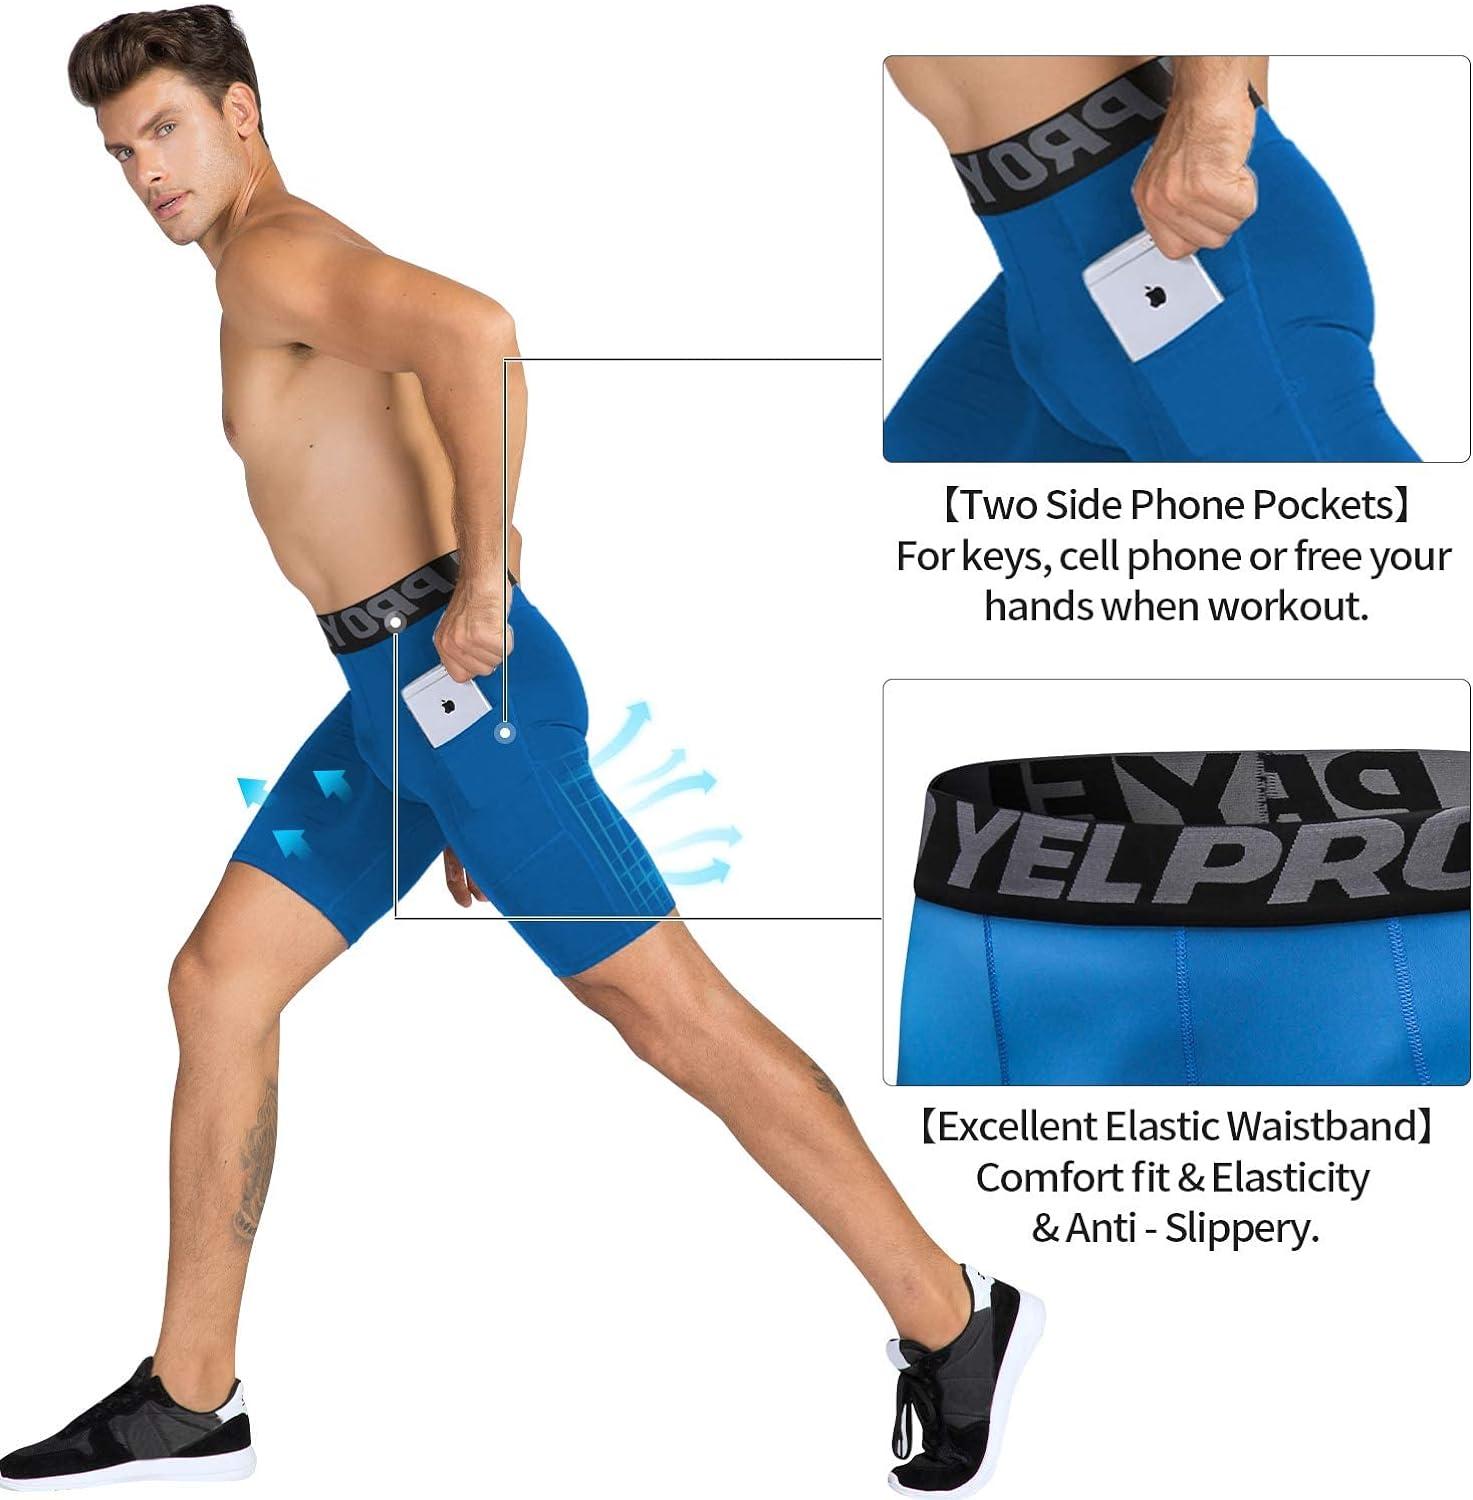 ABTIOYLLZ 3 Pack Compression Shorts for Men Spandex Running Workout  Athletic Baselayer Underwear Shorts Pocket 3pack